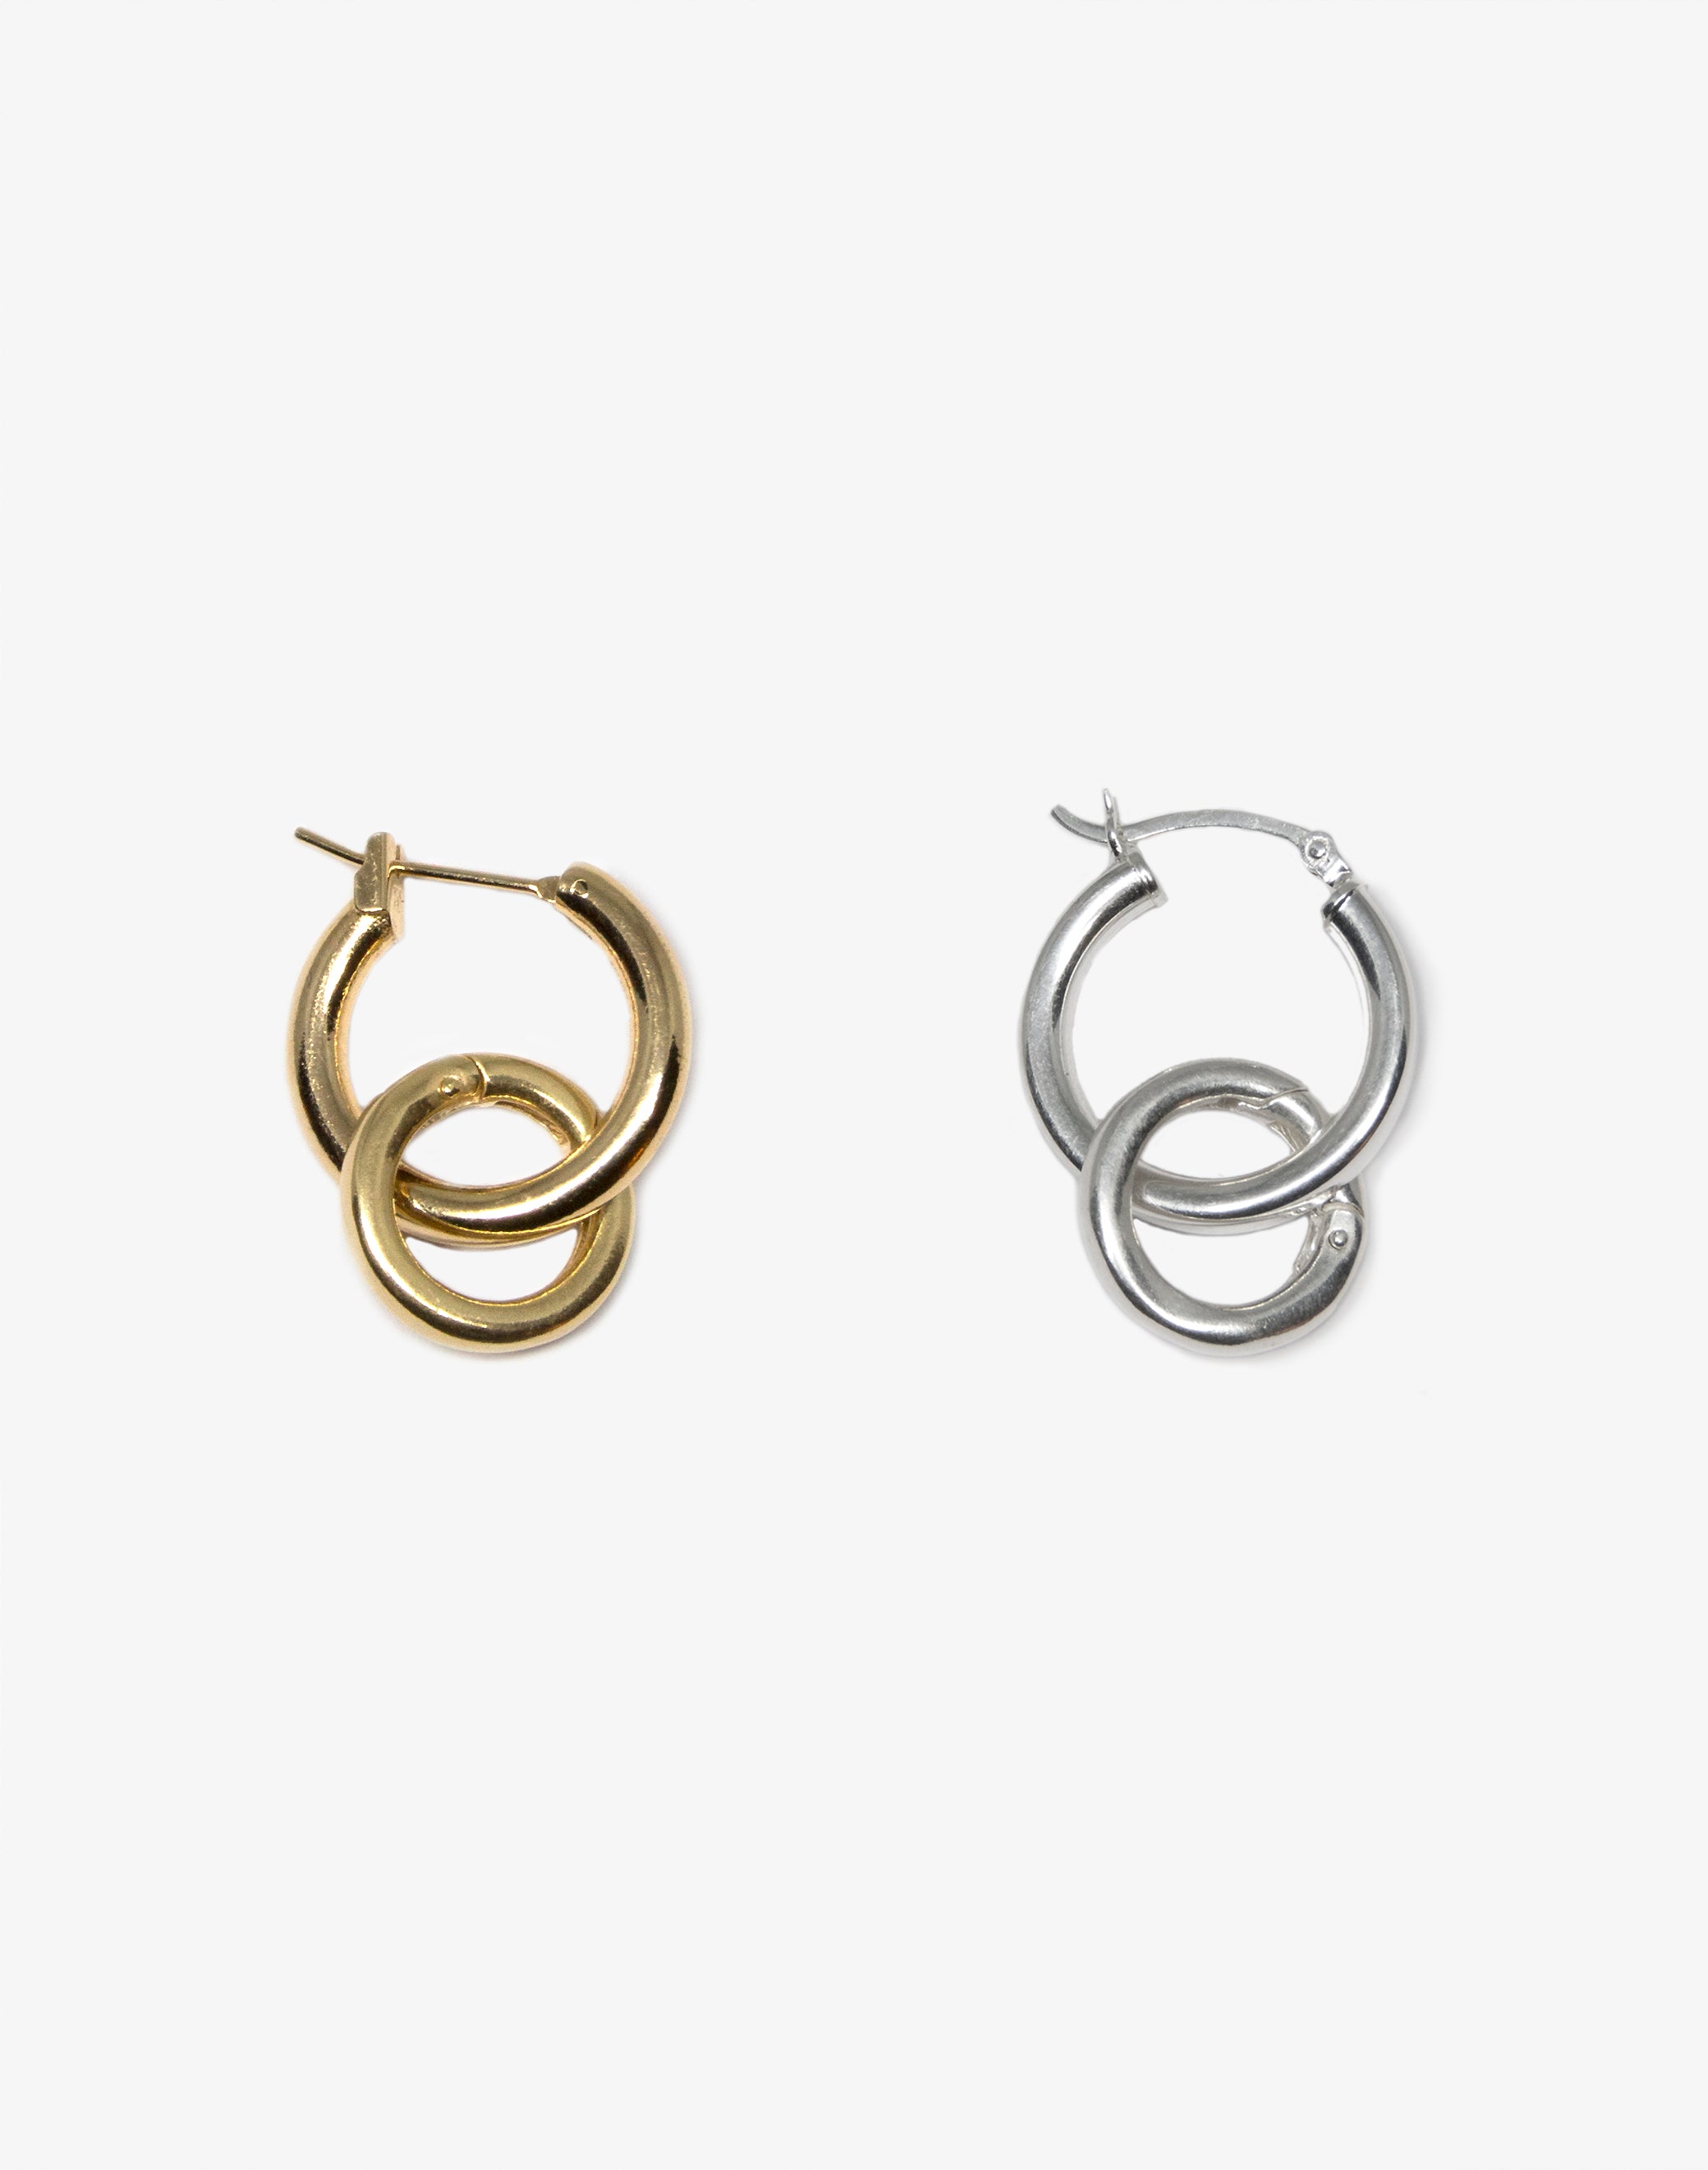 llayers jewelry silver gold loop men hoops earring minimal jewelry Made In Brooklyn